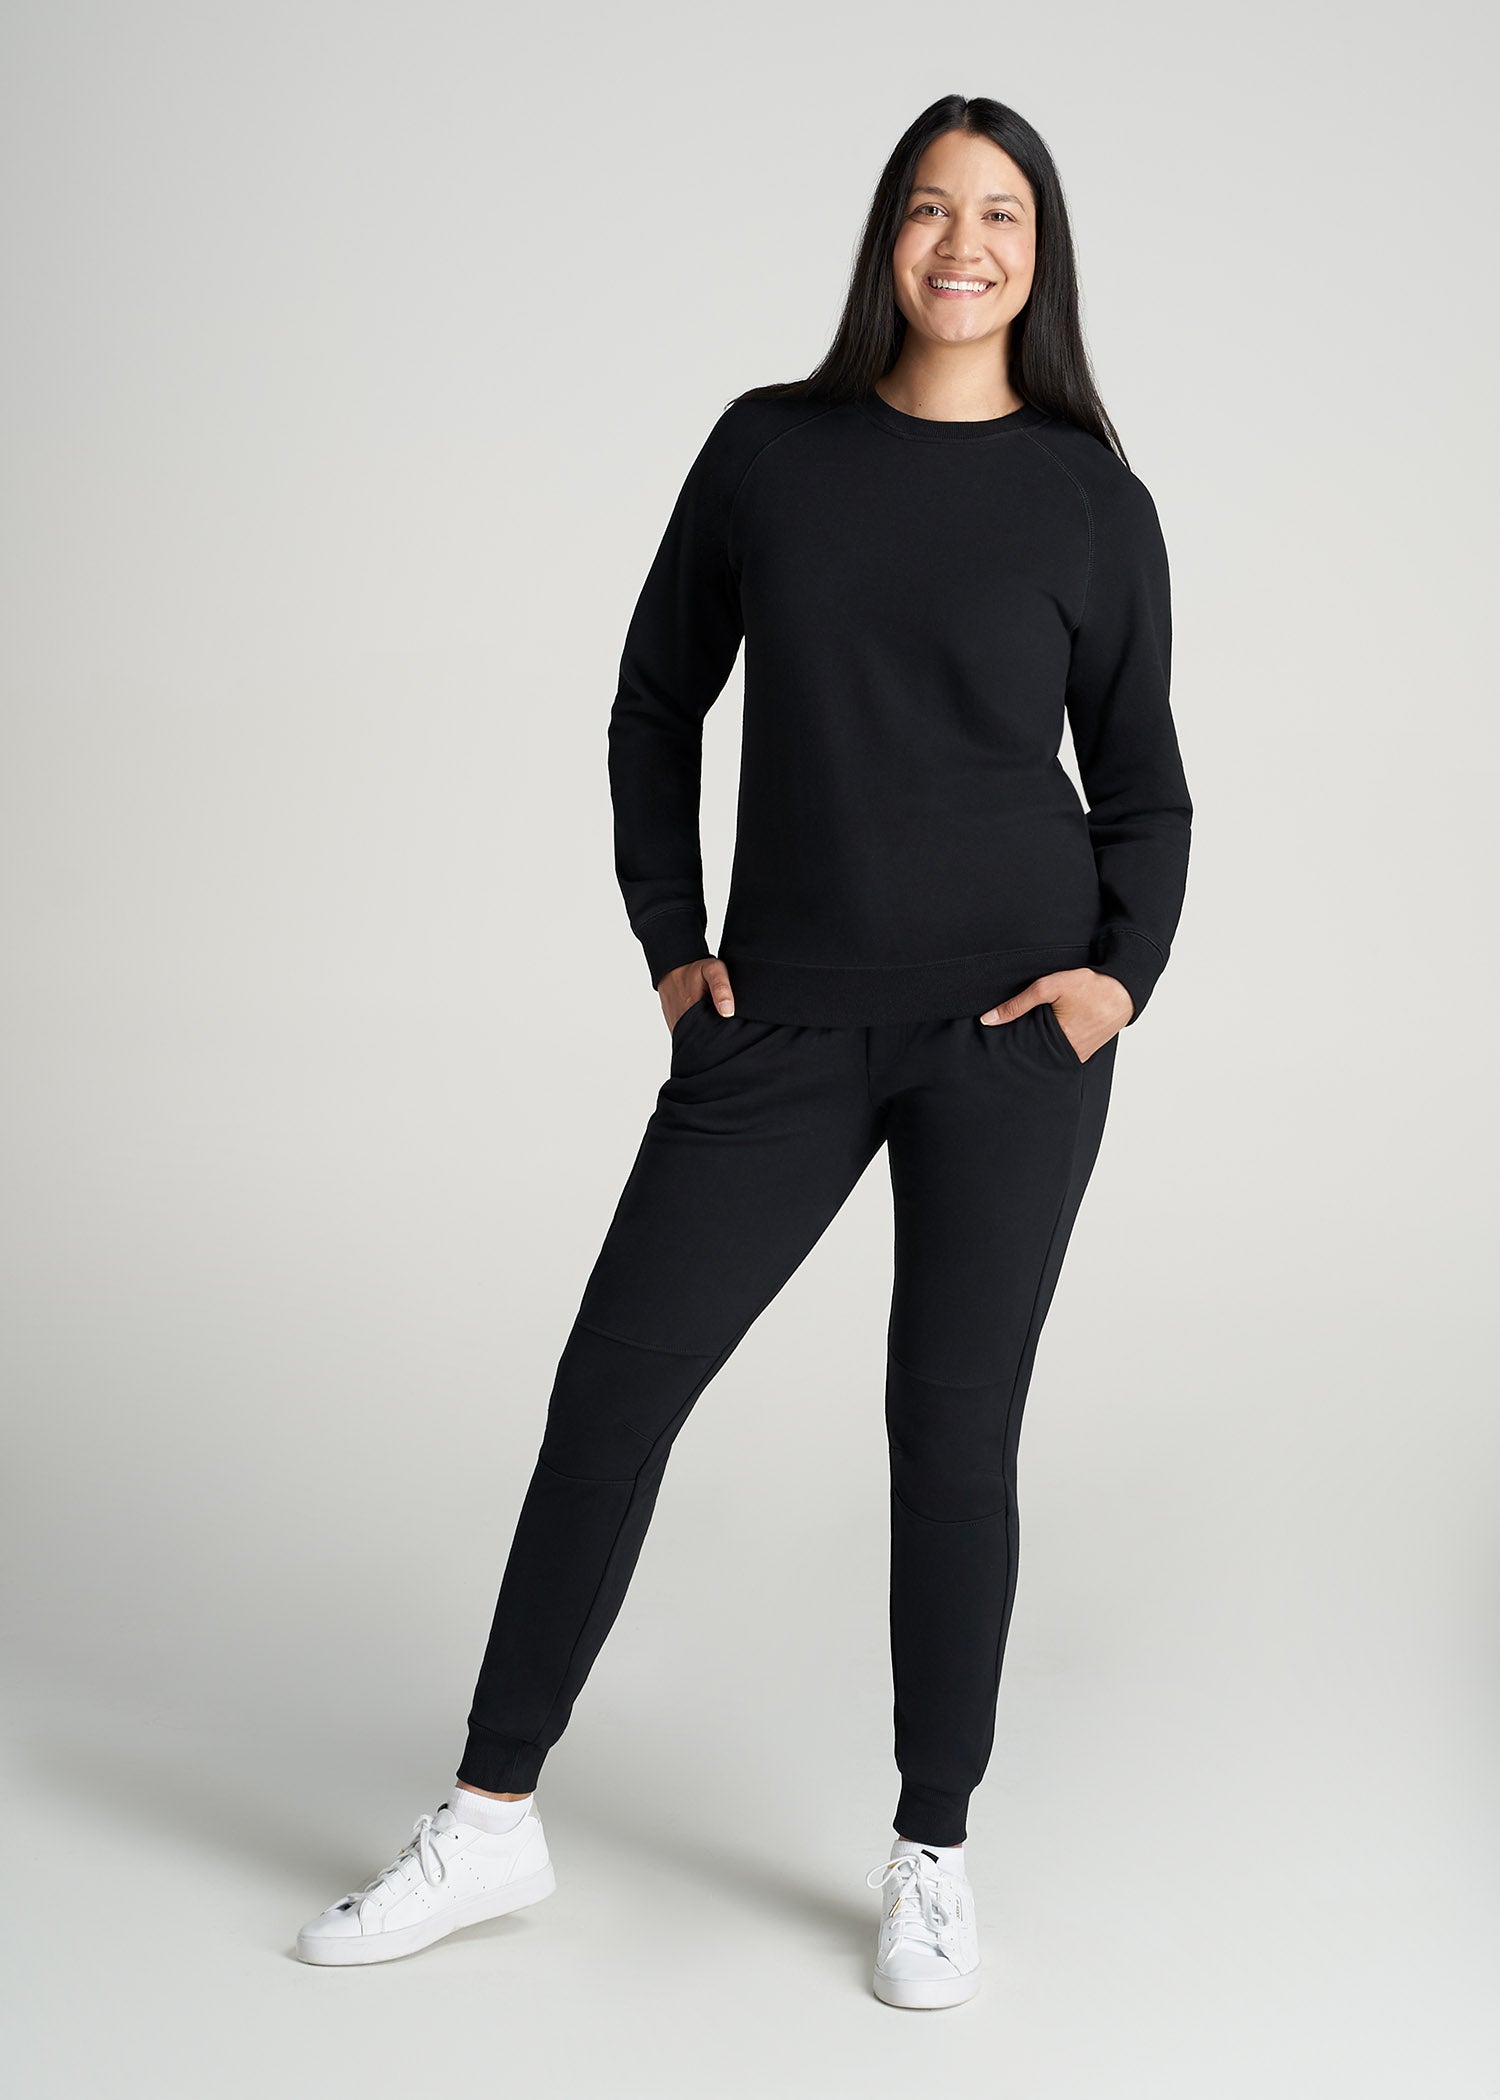 Wearever French Terry Crewneck Women's Tall Sweatshirt